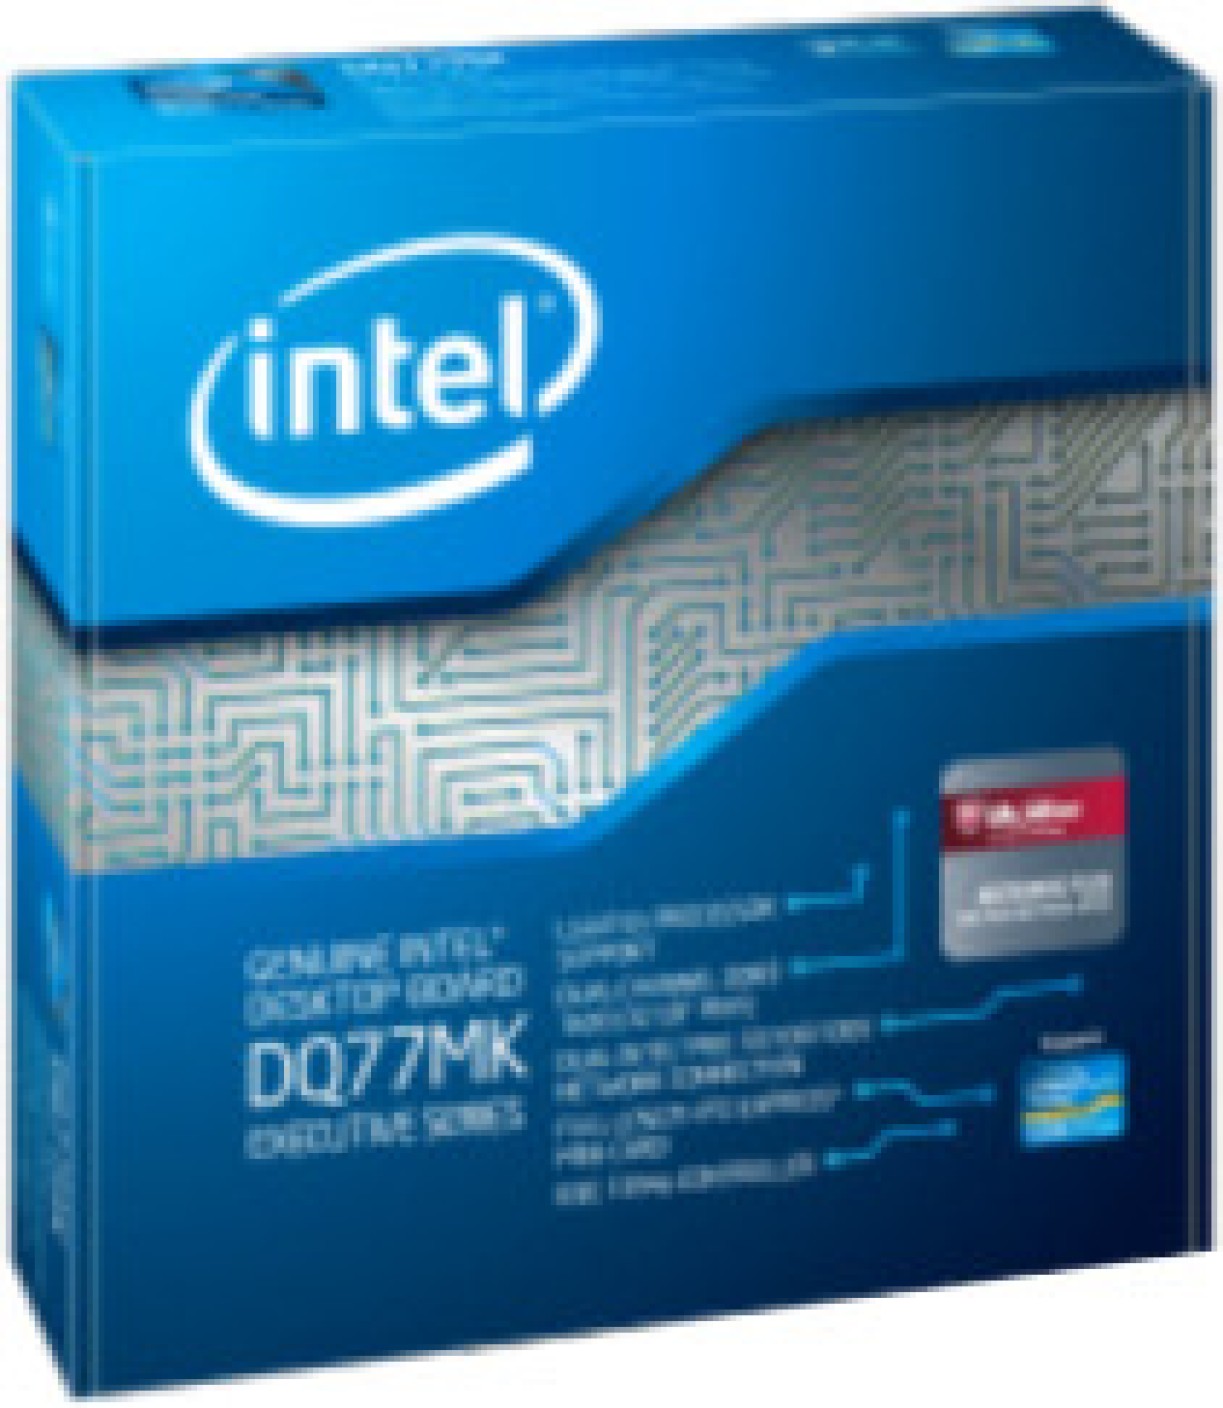 Intel DQ77MK Motherboard - Intel : Flipkart.com